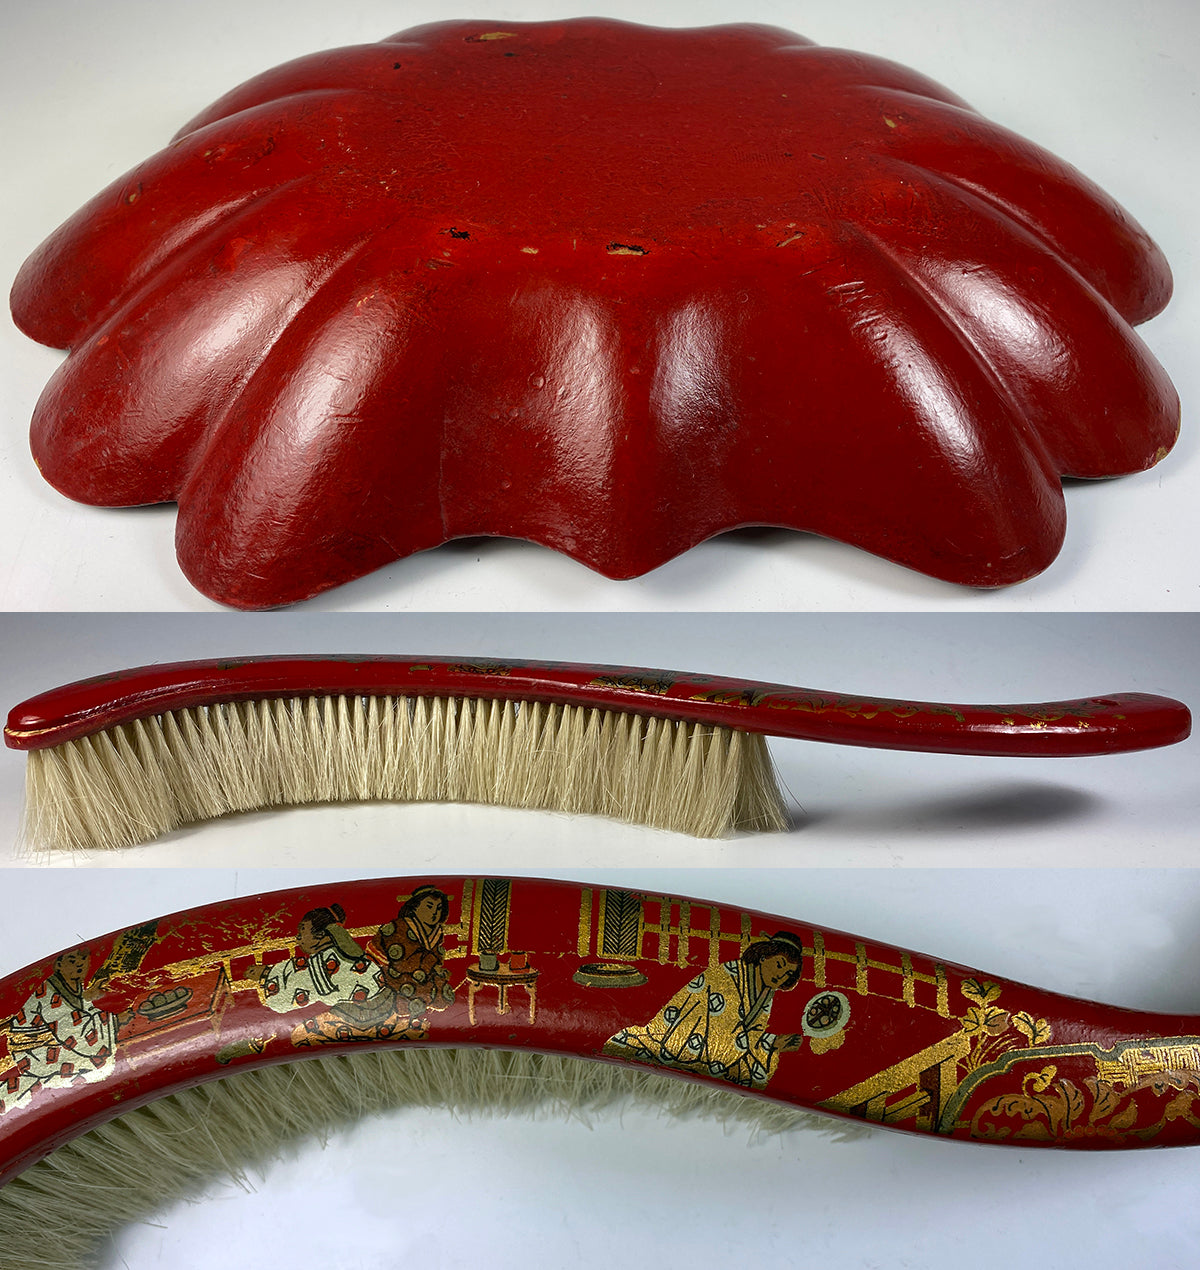 Antique Napoleon III Era French Papier Maché Bread Tray, Crumb & Brush, Red Chinoise